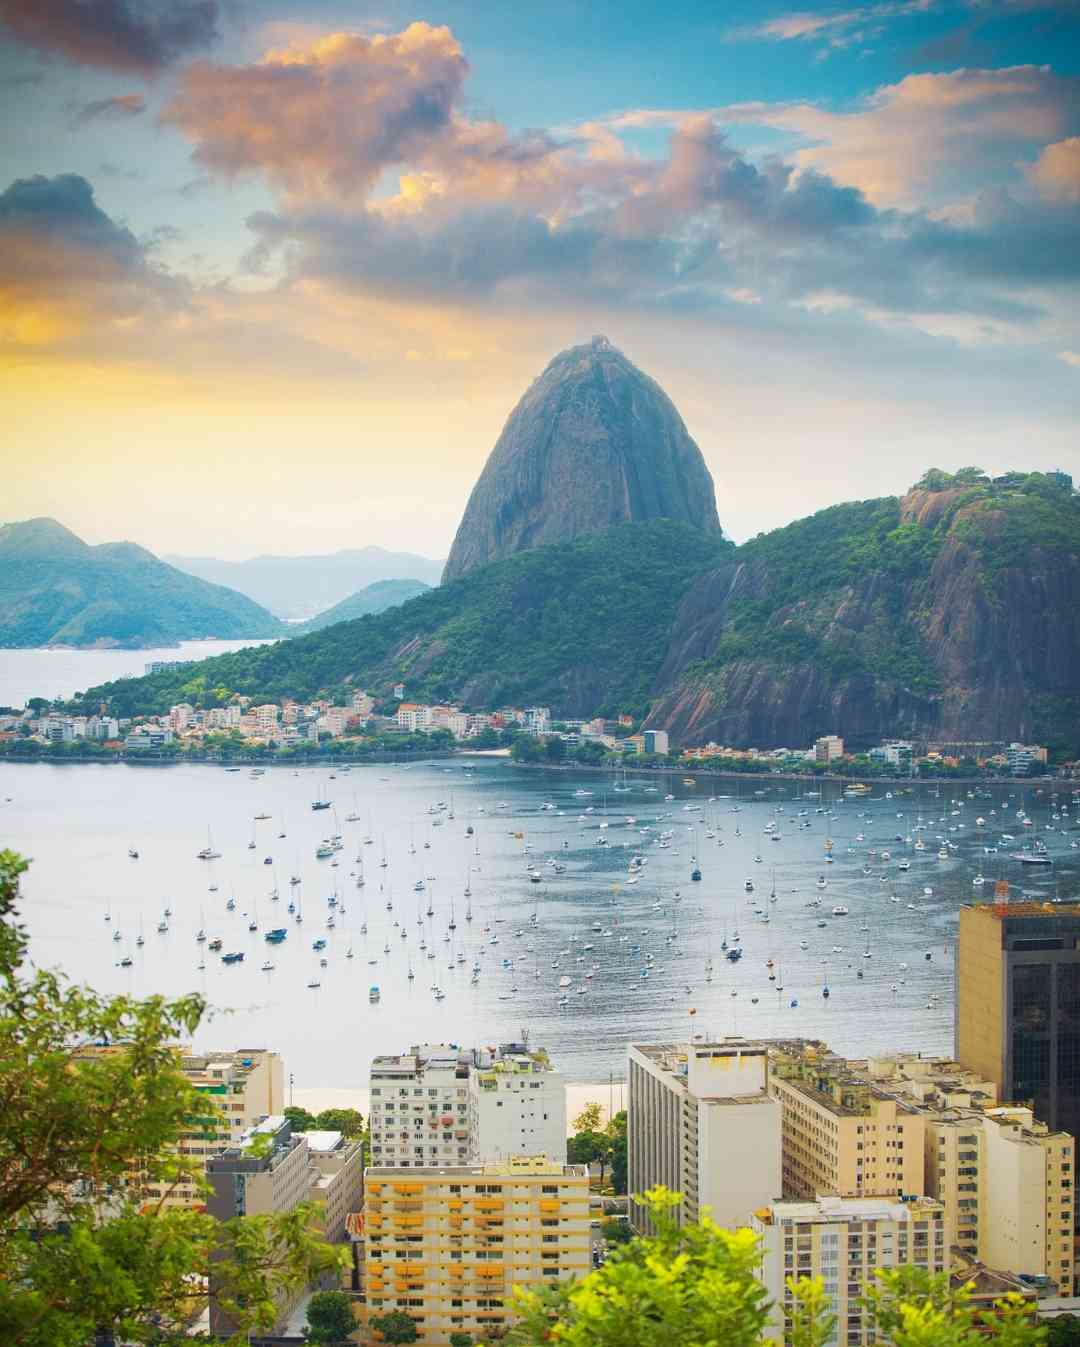 Janeiro free Rio dating in app de Rio De